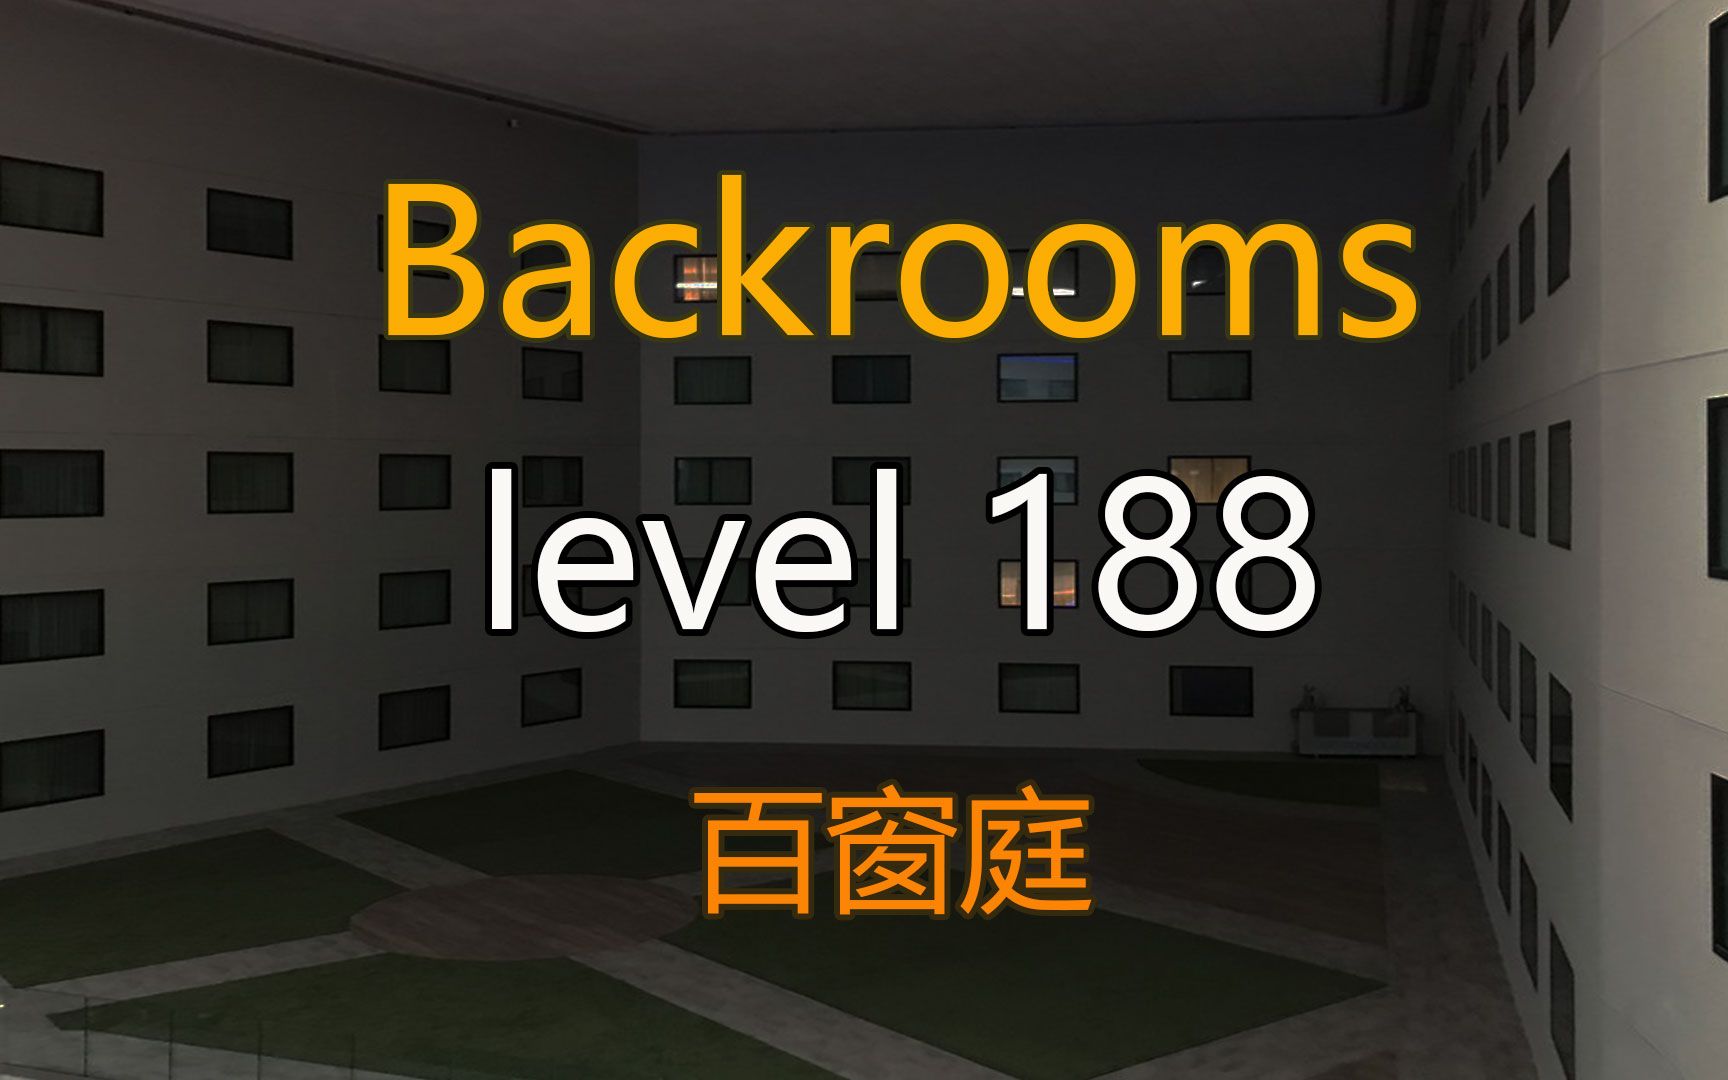 都市怪谈Backrooms level 188 百窗庭  后房 后室